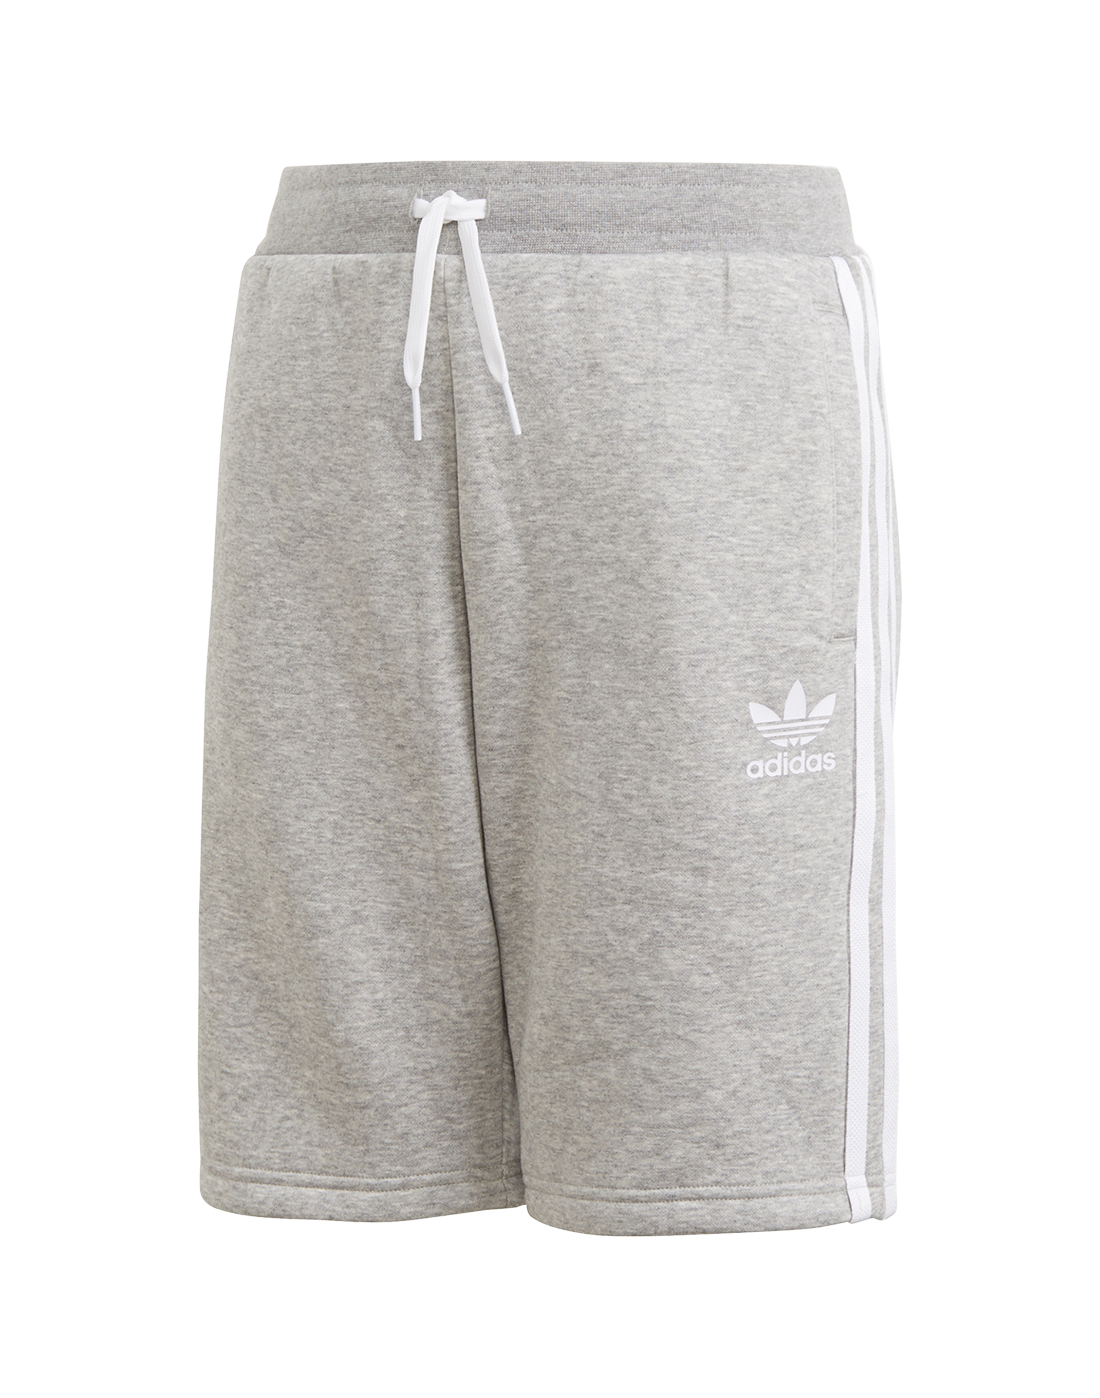 Boy's Grey adidas Originals Shorts | Life Style Sports